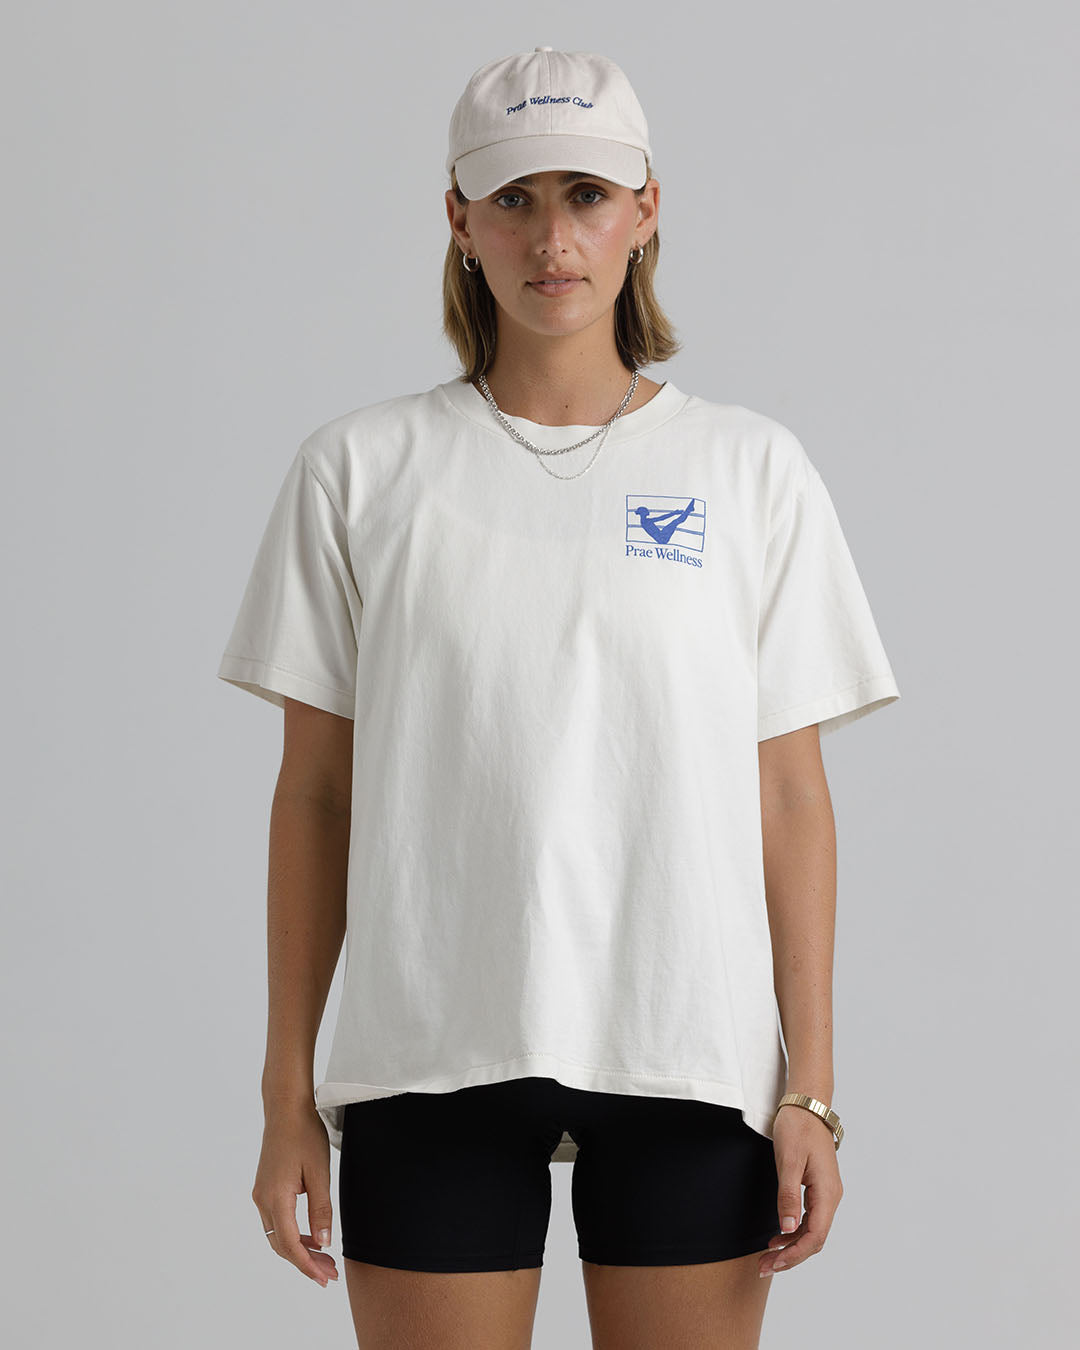 Movement T-Shirt – Cream / Royal Blue General by Prae Wellness - Prae Store